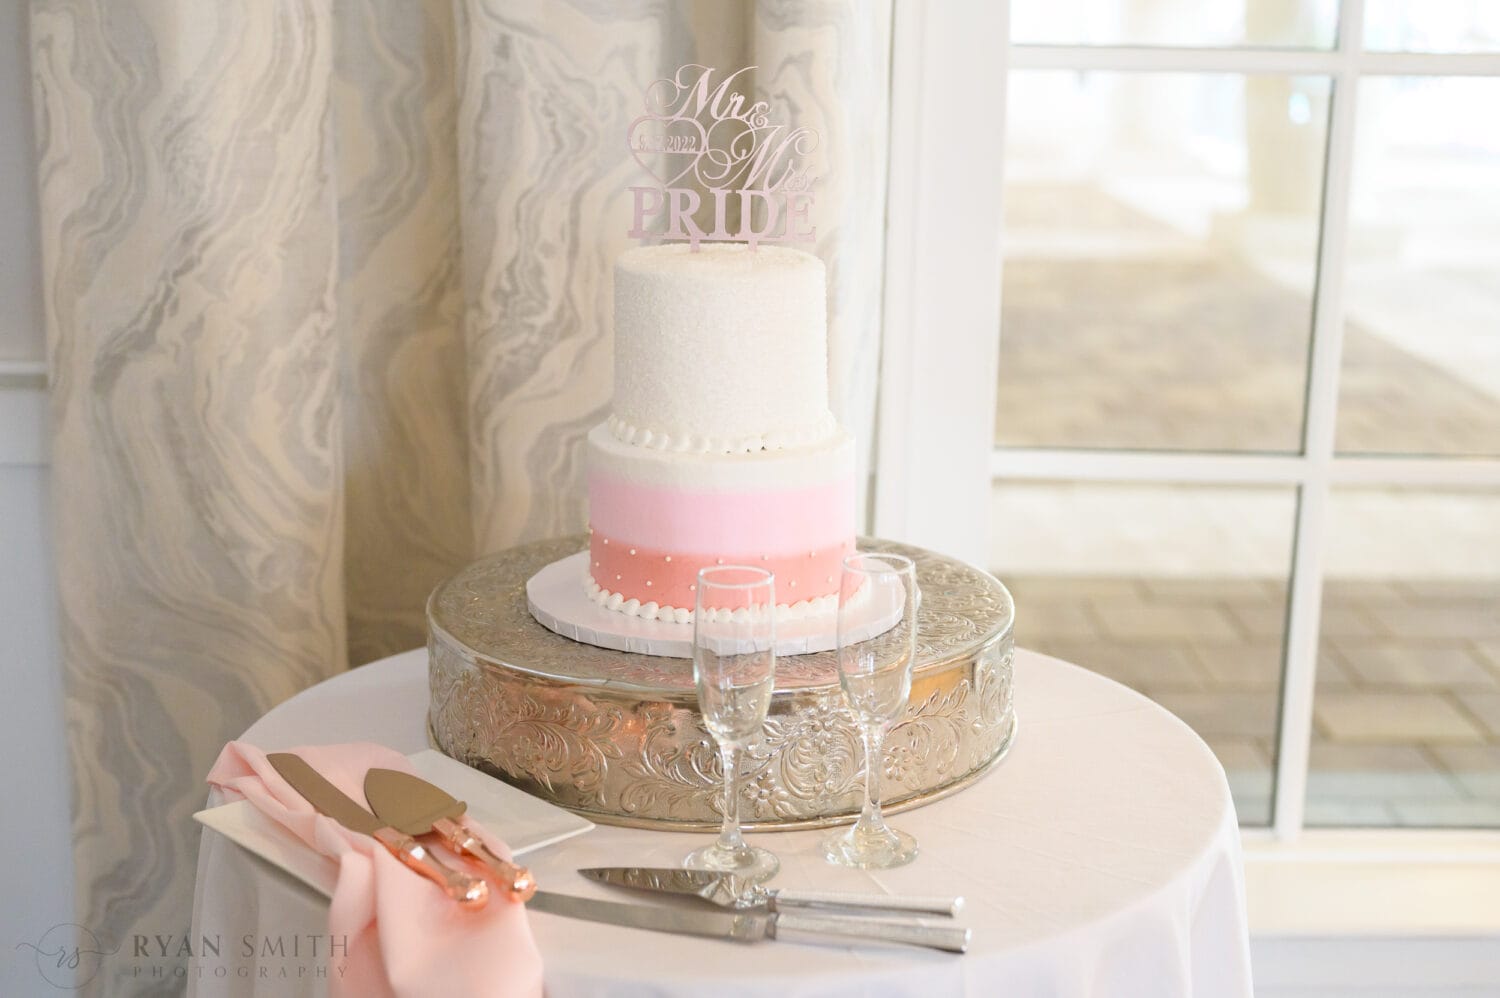 Wedding cake - 21 Main Events at North Beach